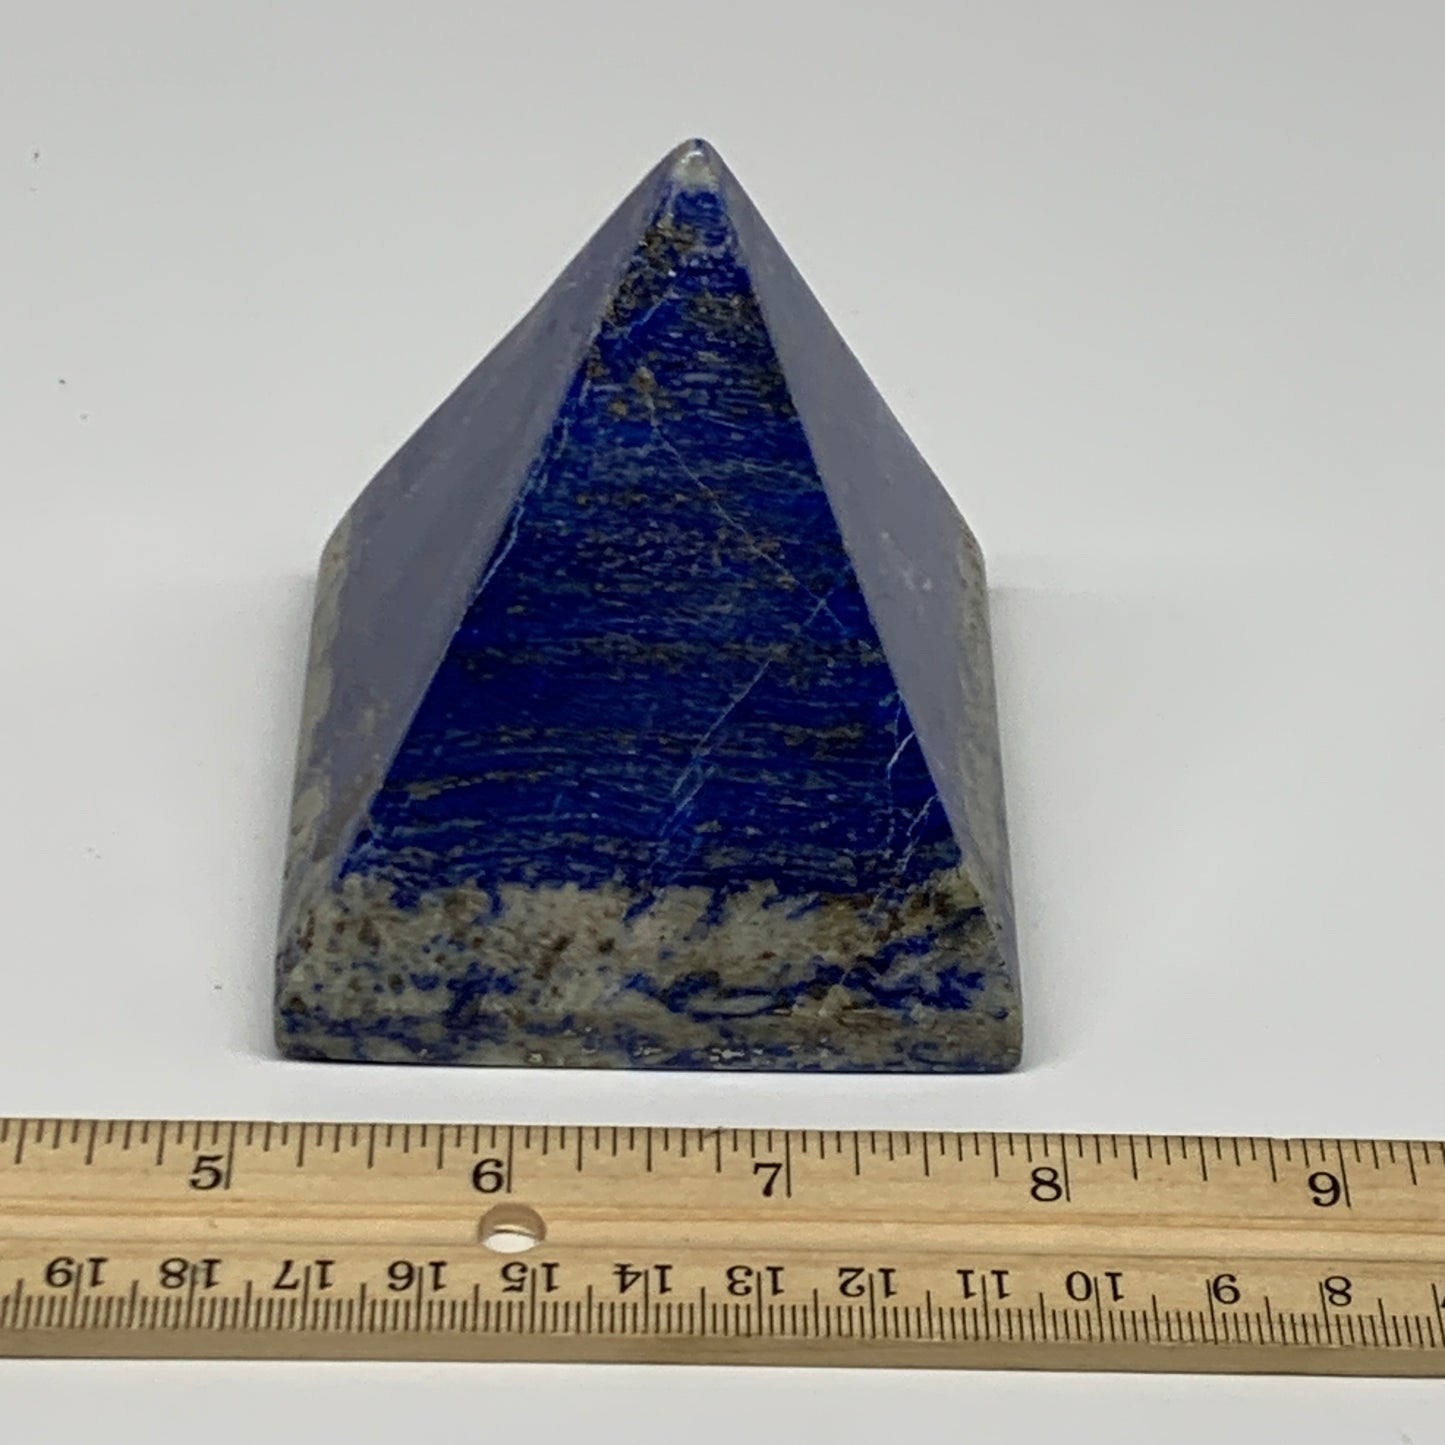 1.1 lbs, 3.1"x2.8"x2.8",Lapis Lazuli Pyramid Crystal Gemstone @Afghanistan,B2778